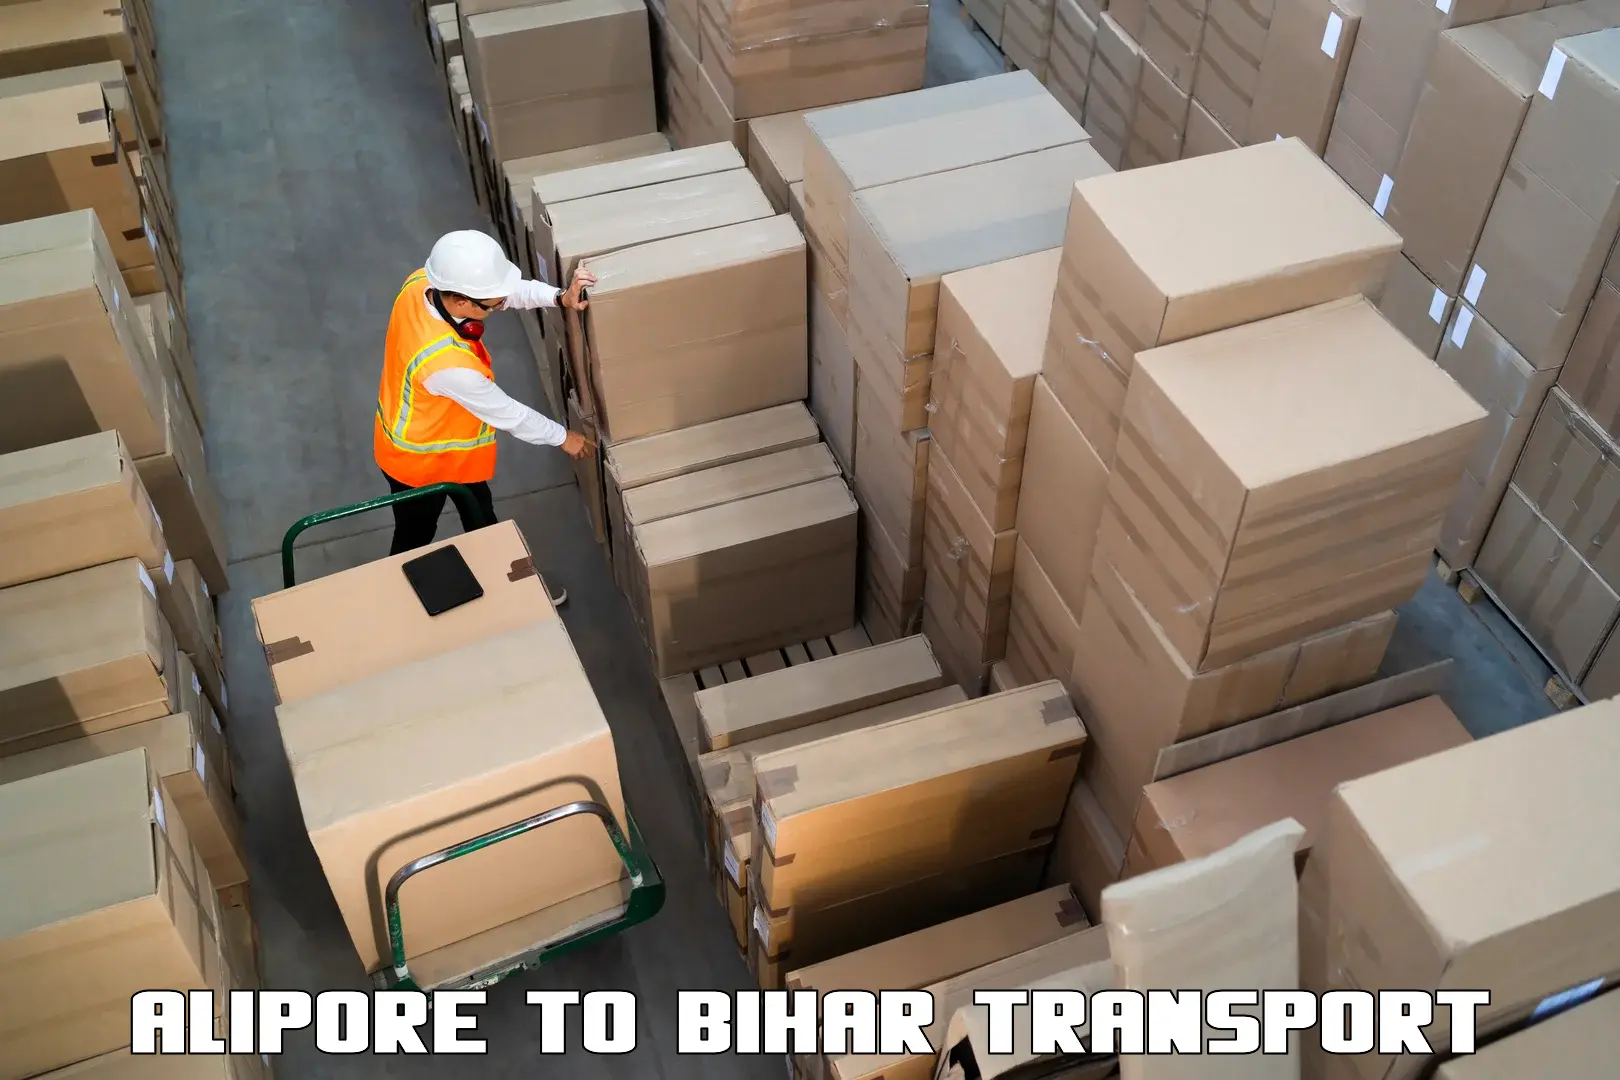 Pick up transport service Alipore to Bihar